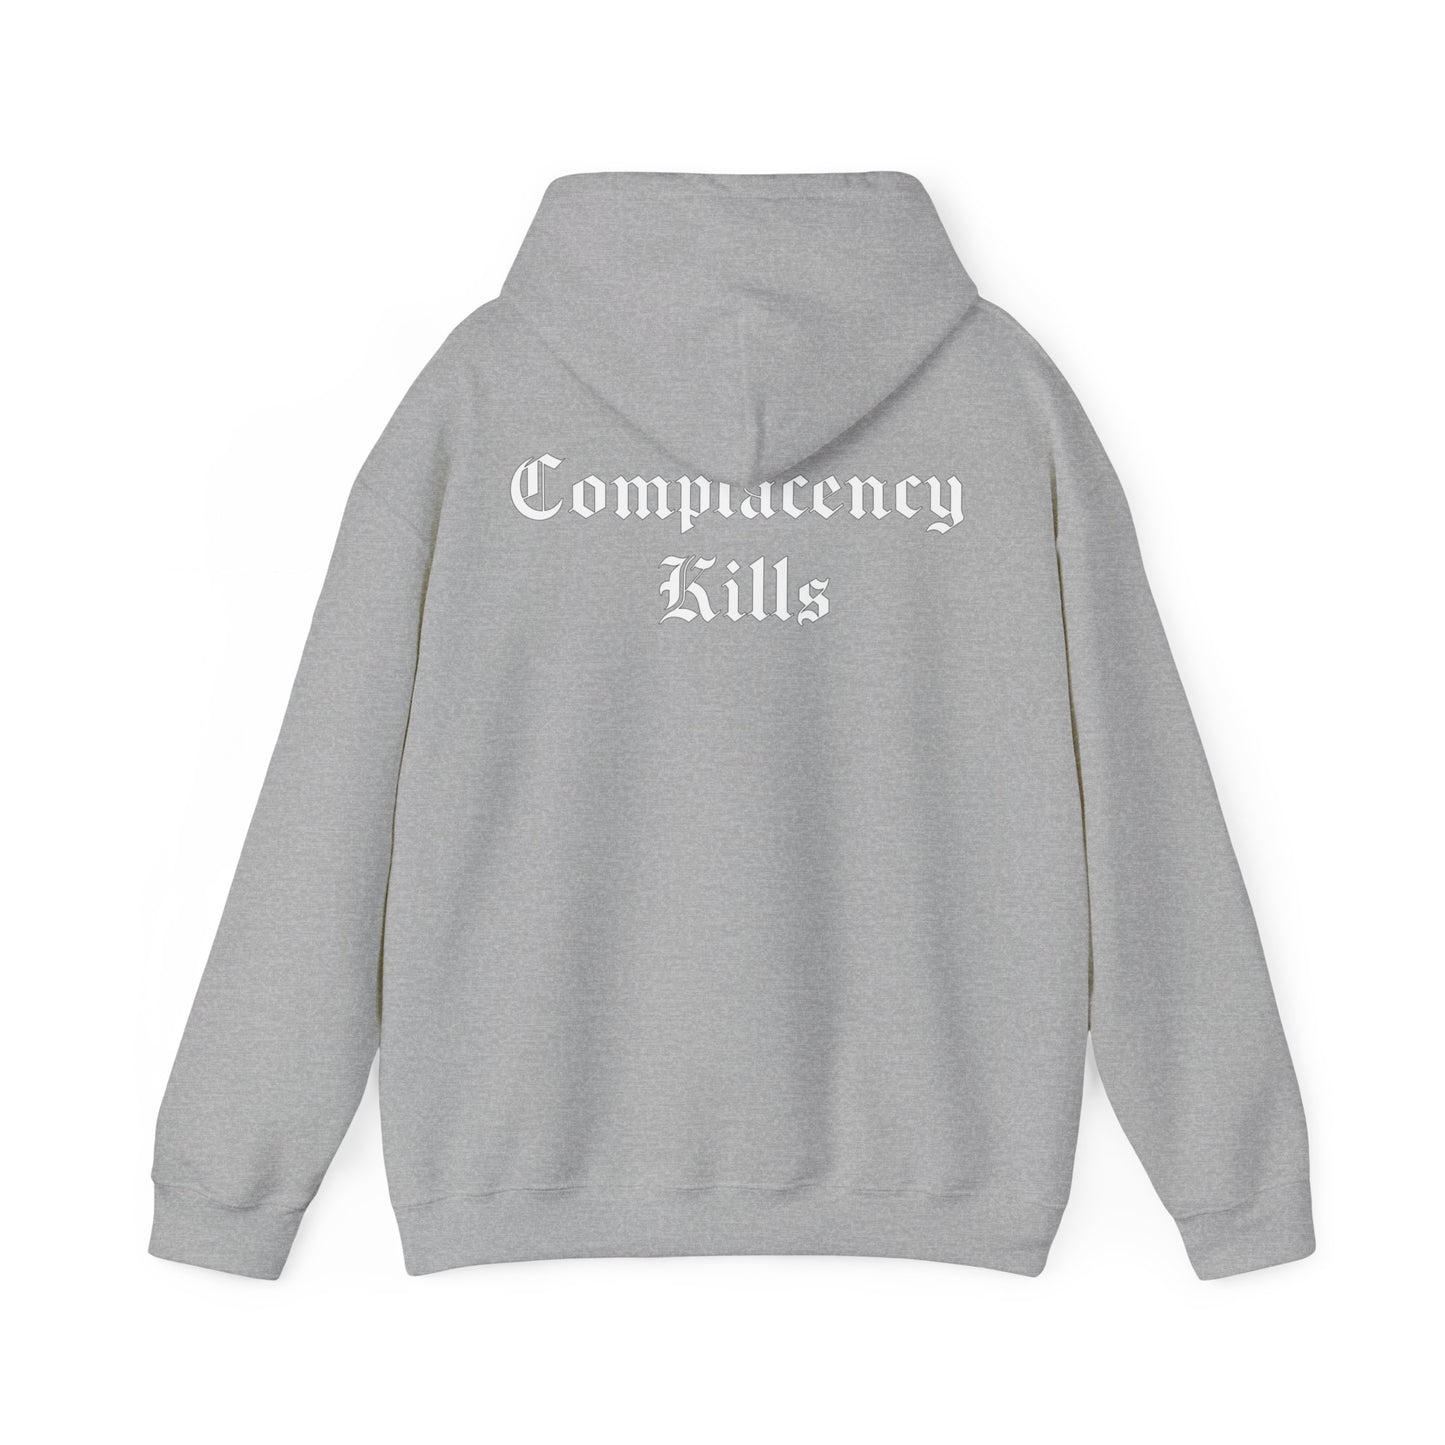 Complacency Kills Hooded Sweatshirt